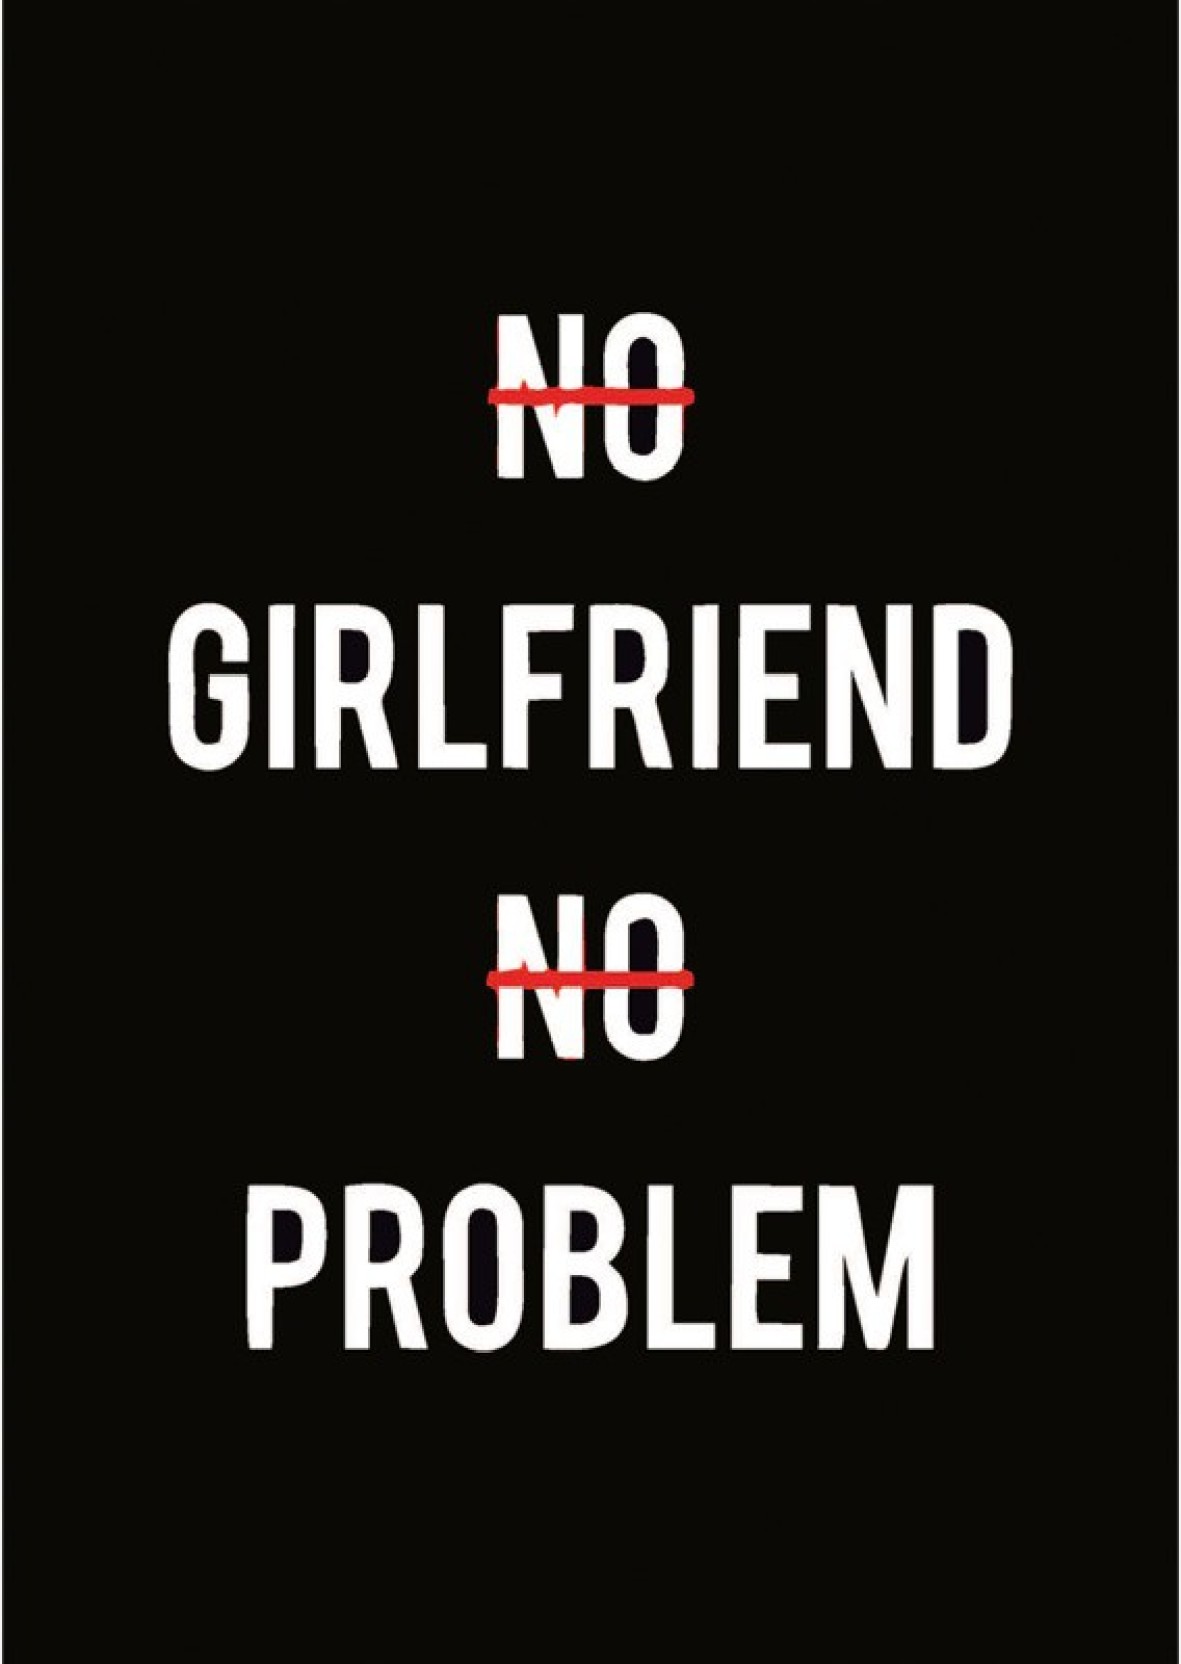 No girlfriend no problem. No boyfriend no problem обои. Постер no problem. Обои на телефон no problem.